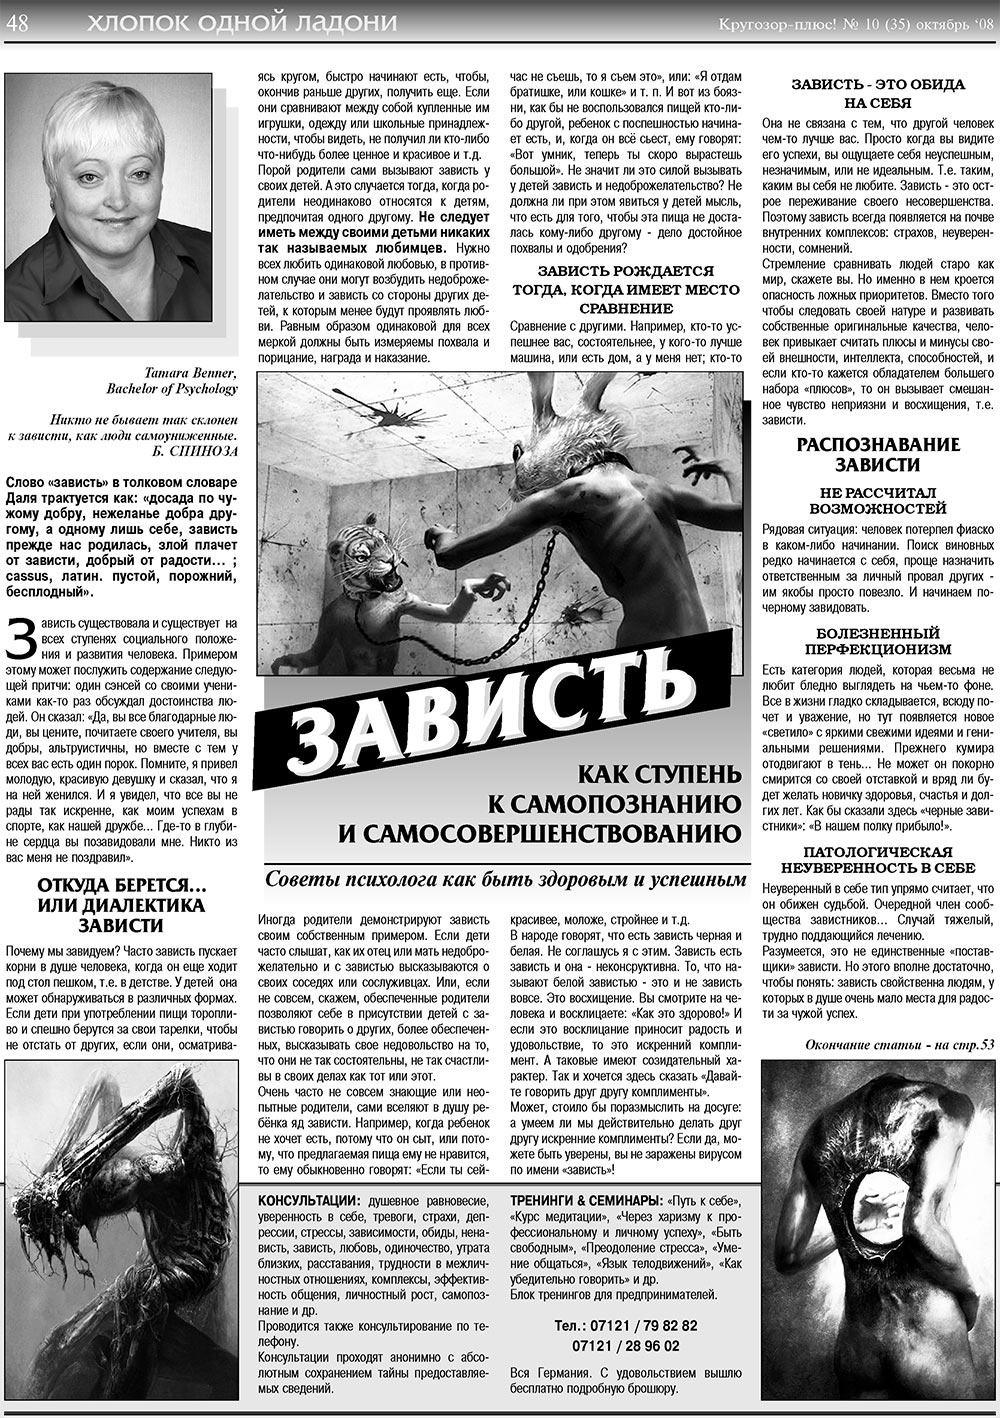 Кругозор плюс! (газета). 2008 год, номер 10, стр. 48